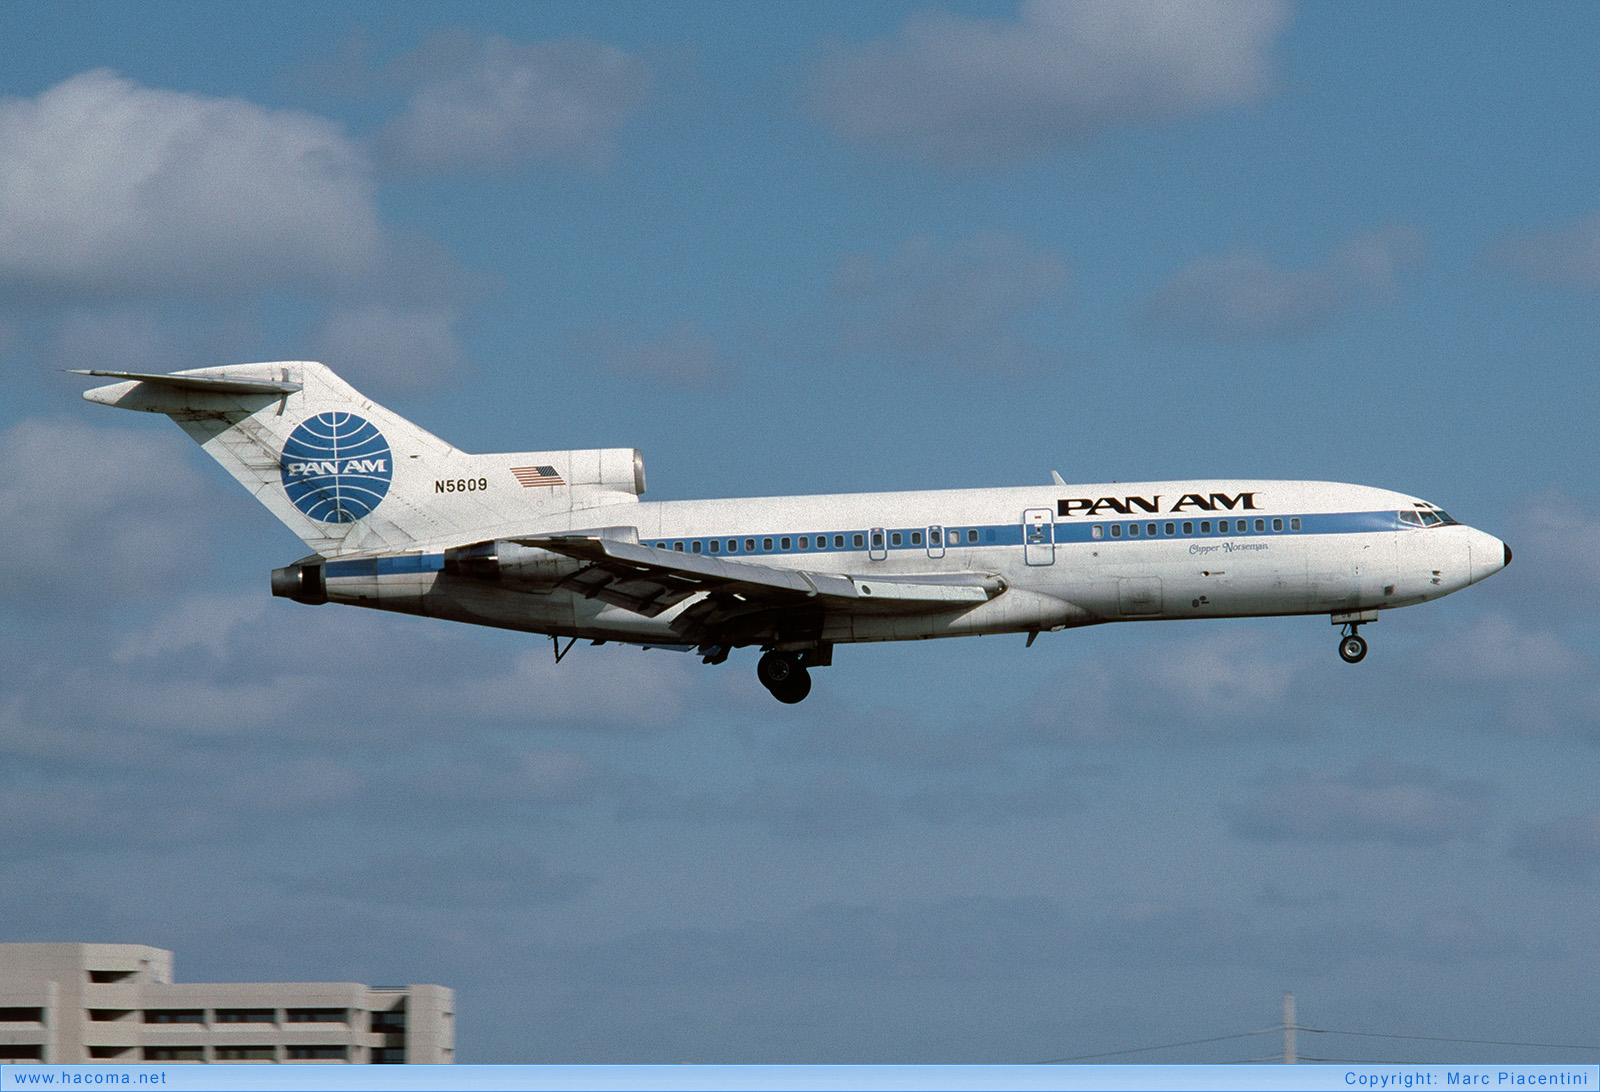 Photo of N5609 - Pan Am Clipper Norseman - Miami International Airport - Nov 18, 1983